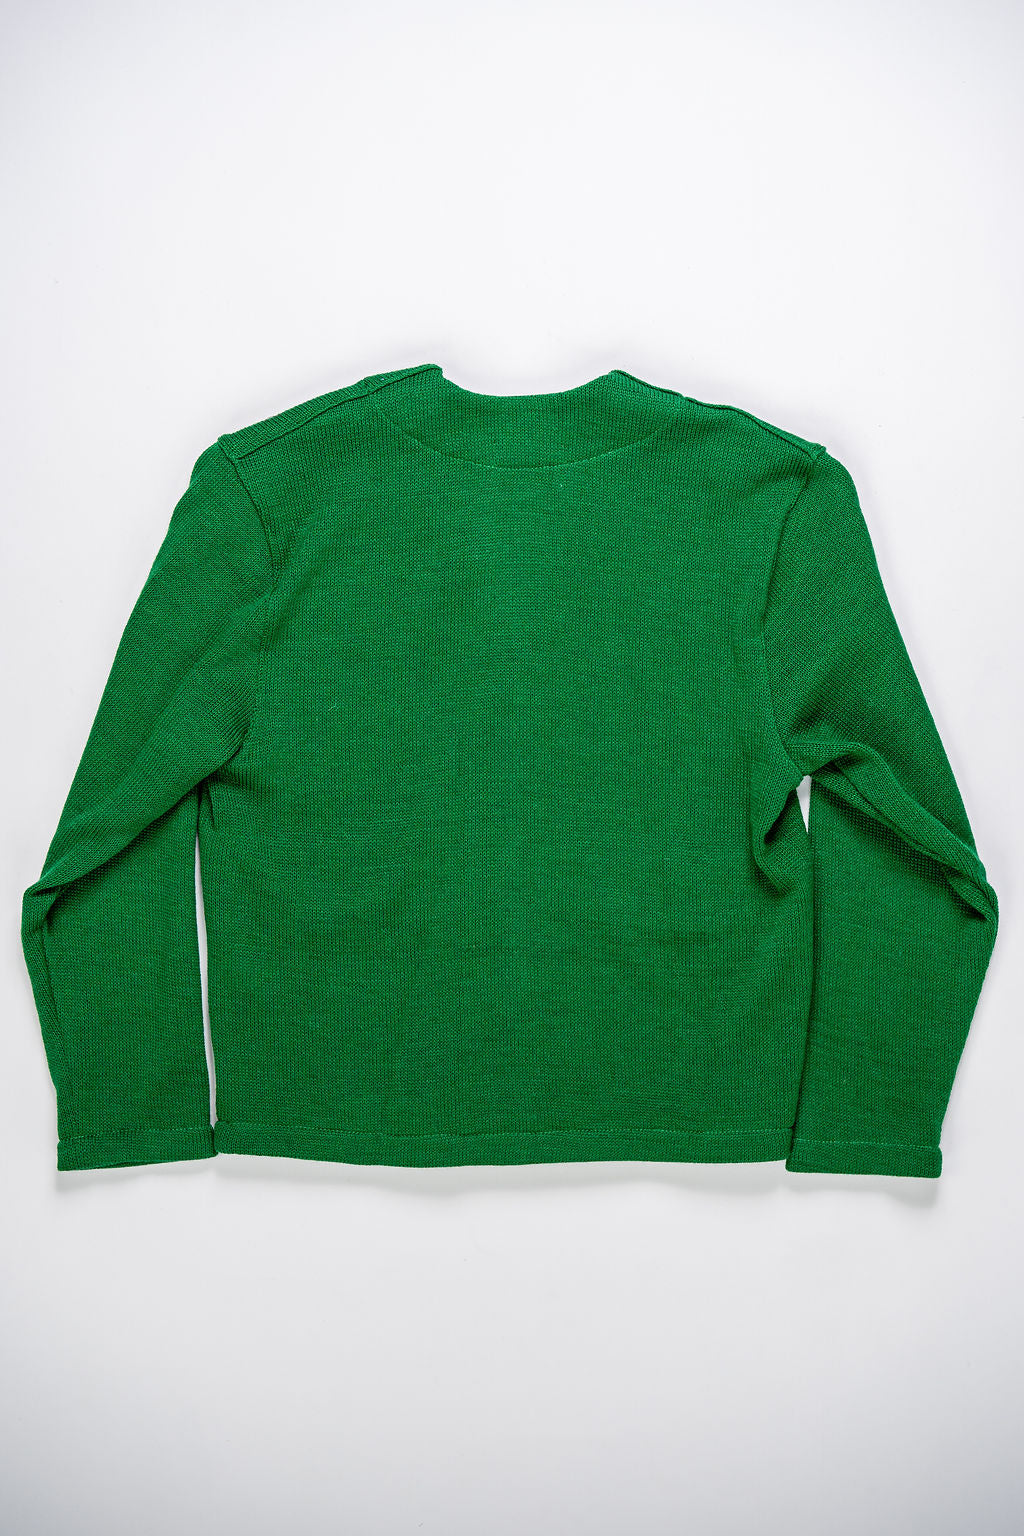 Dehen 1920 Slouchy Cardigan Sweater - Kelly Green